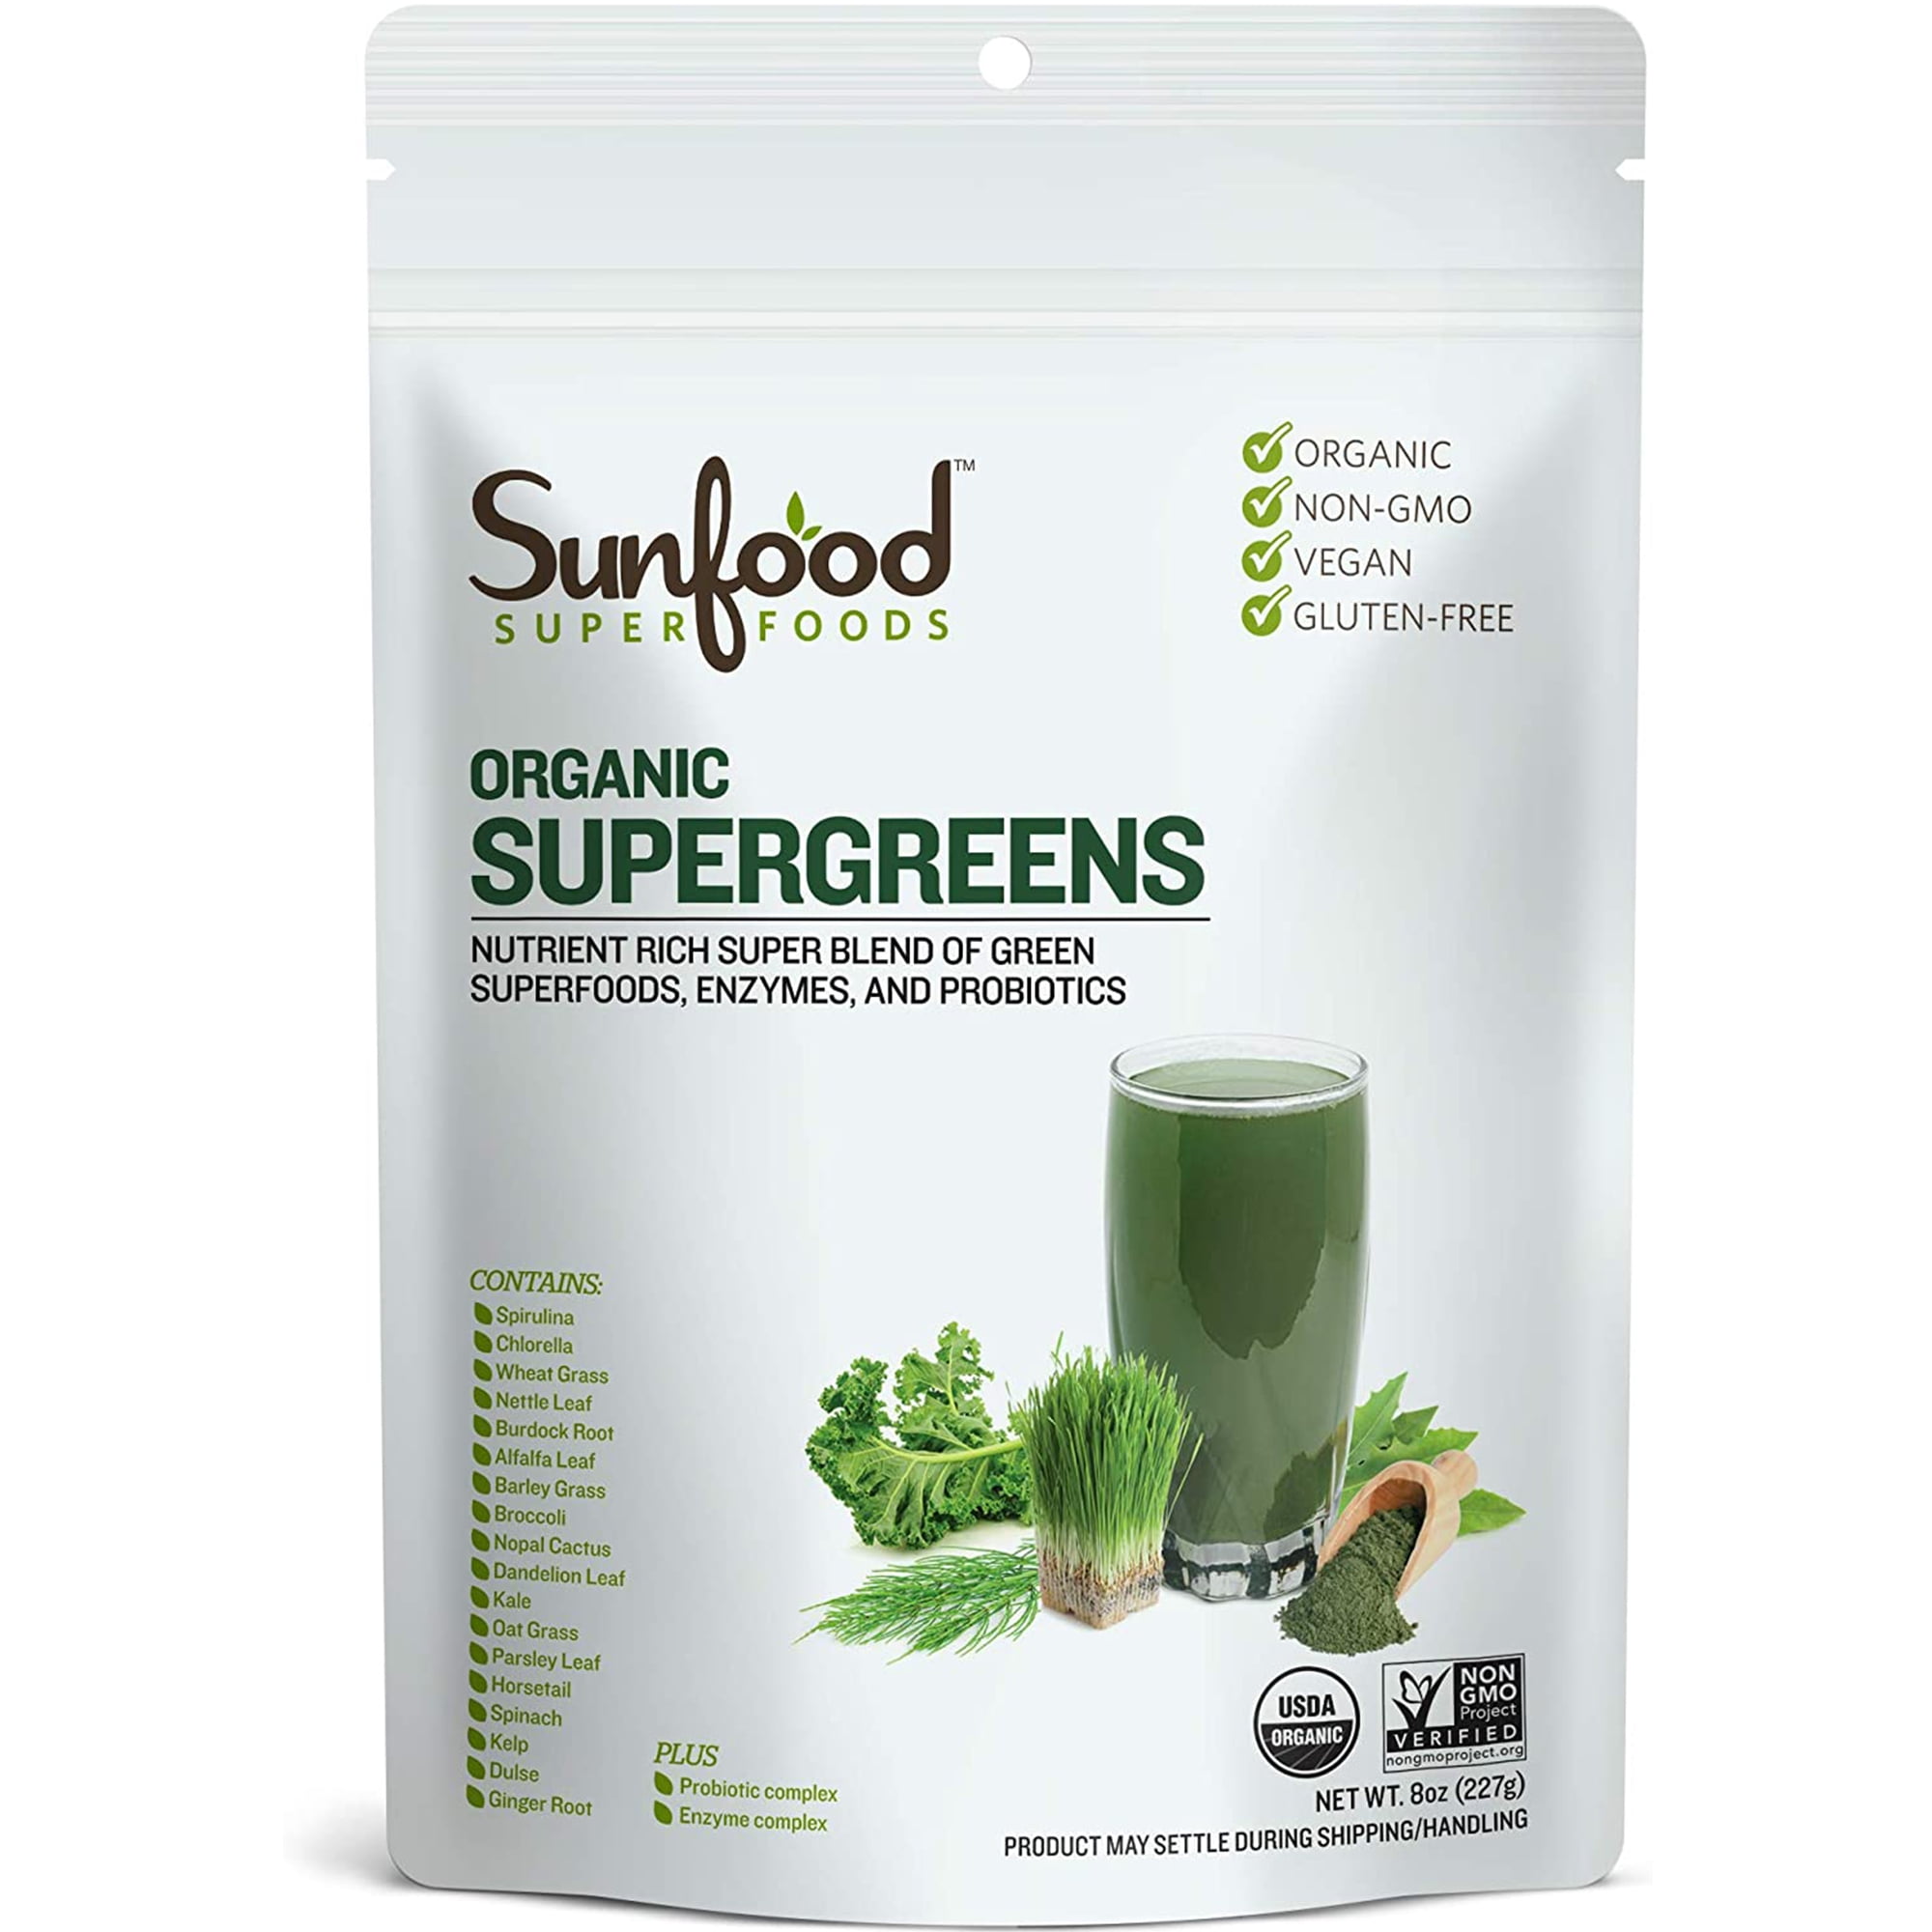 Sunfood Superfoods Super Greens Organic Superfood Powder Probiotic Enzymes, 8 Oz - Walmart.com